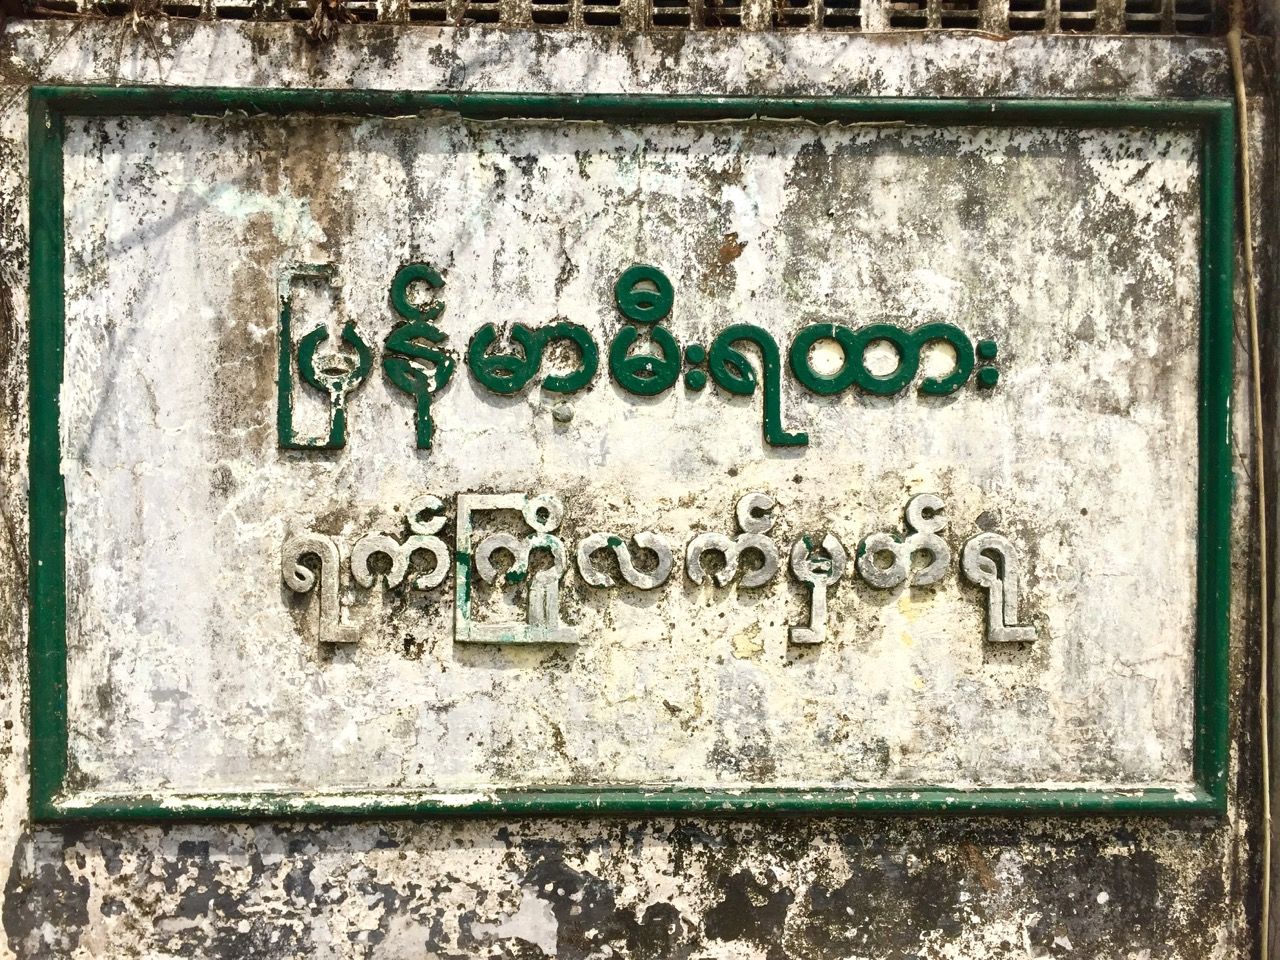 A sign in Burmese.